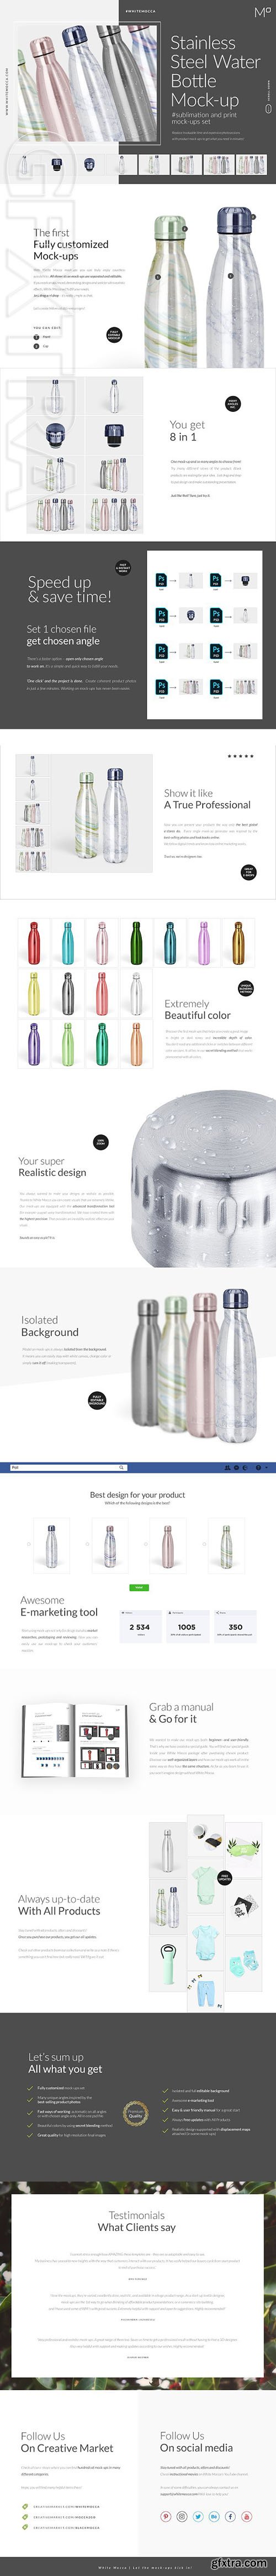 CreativeMarket - Stainless Steel Water Bottle Mock-up 3406555